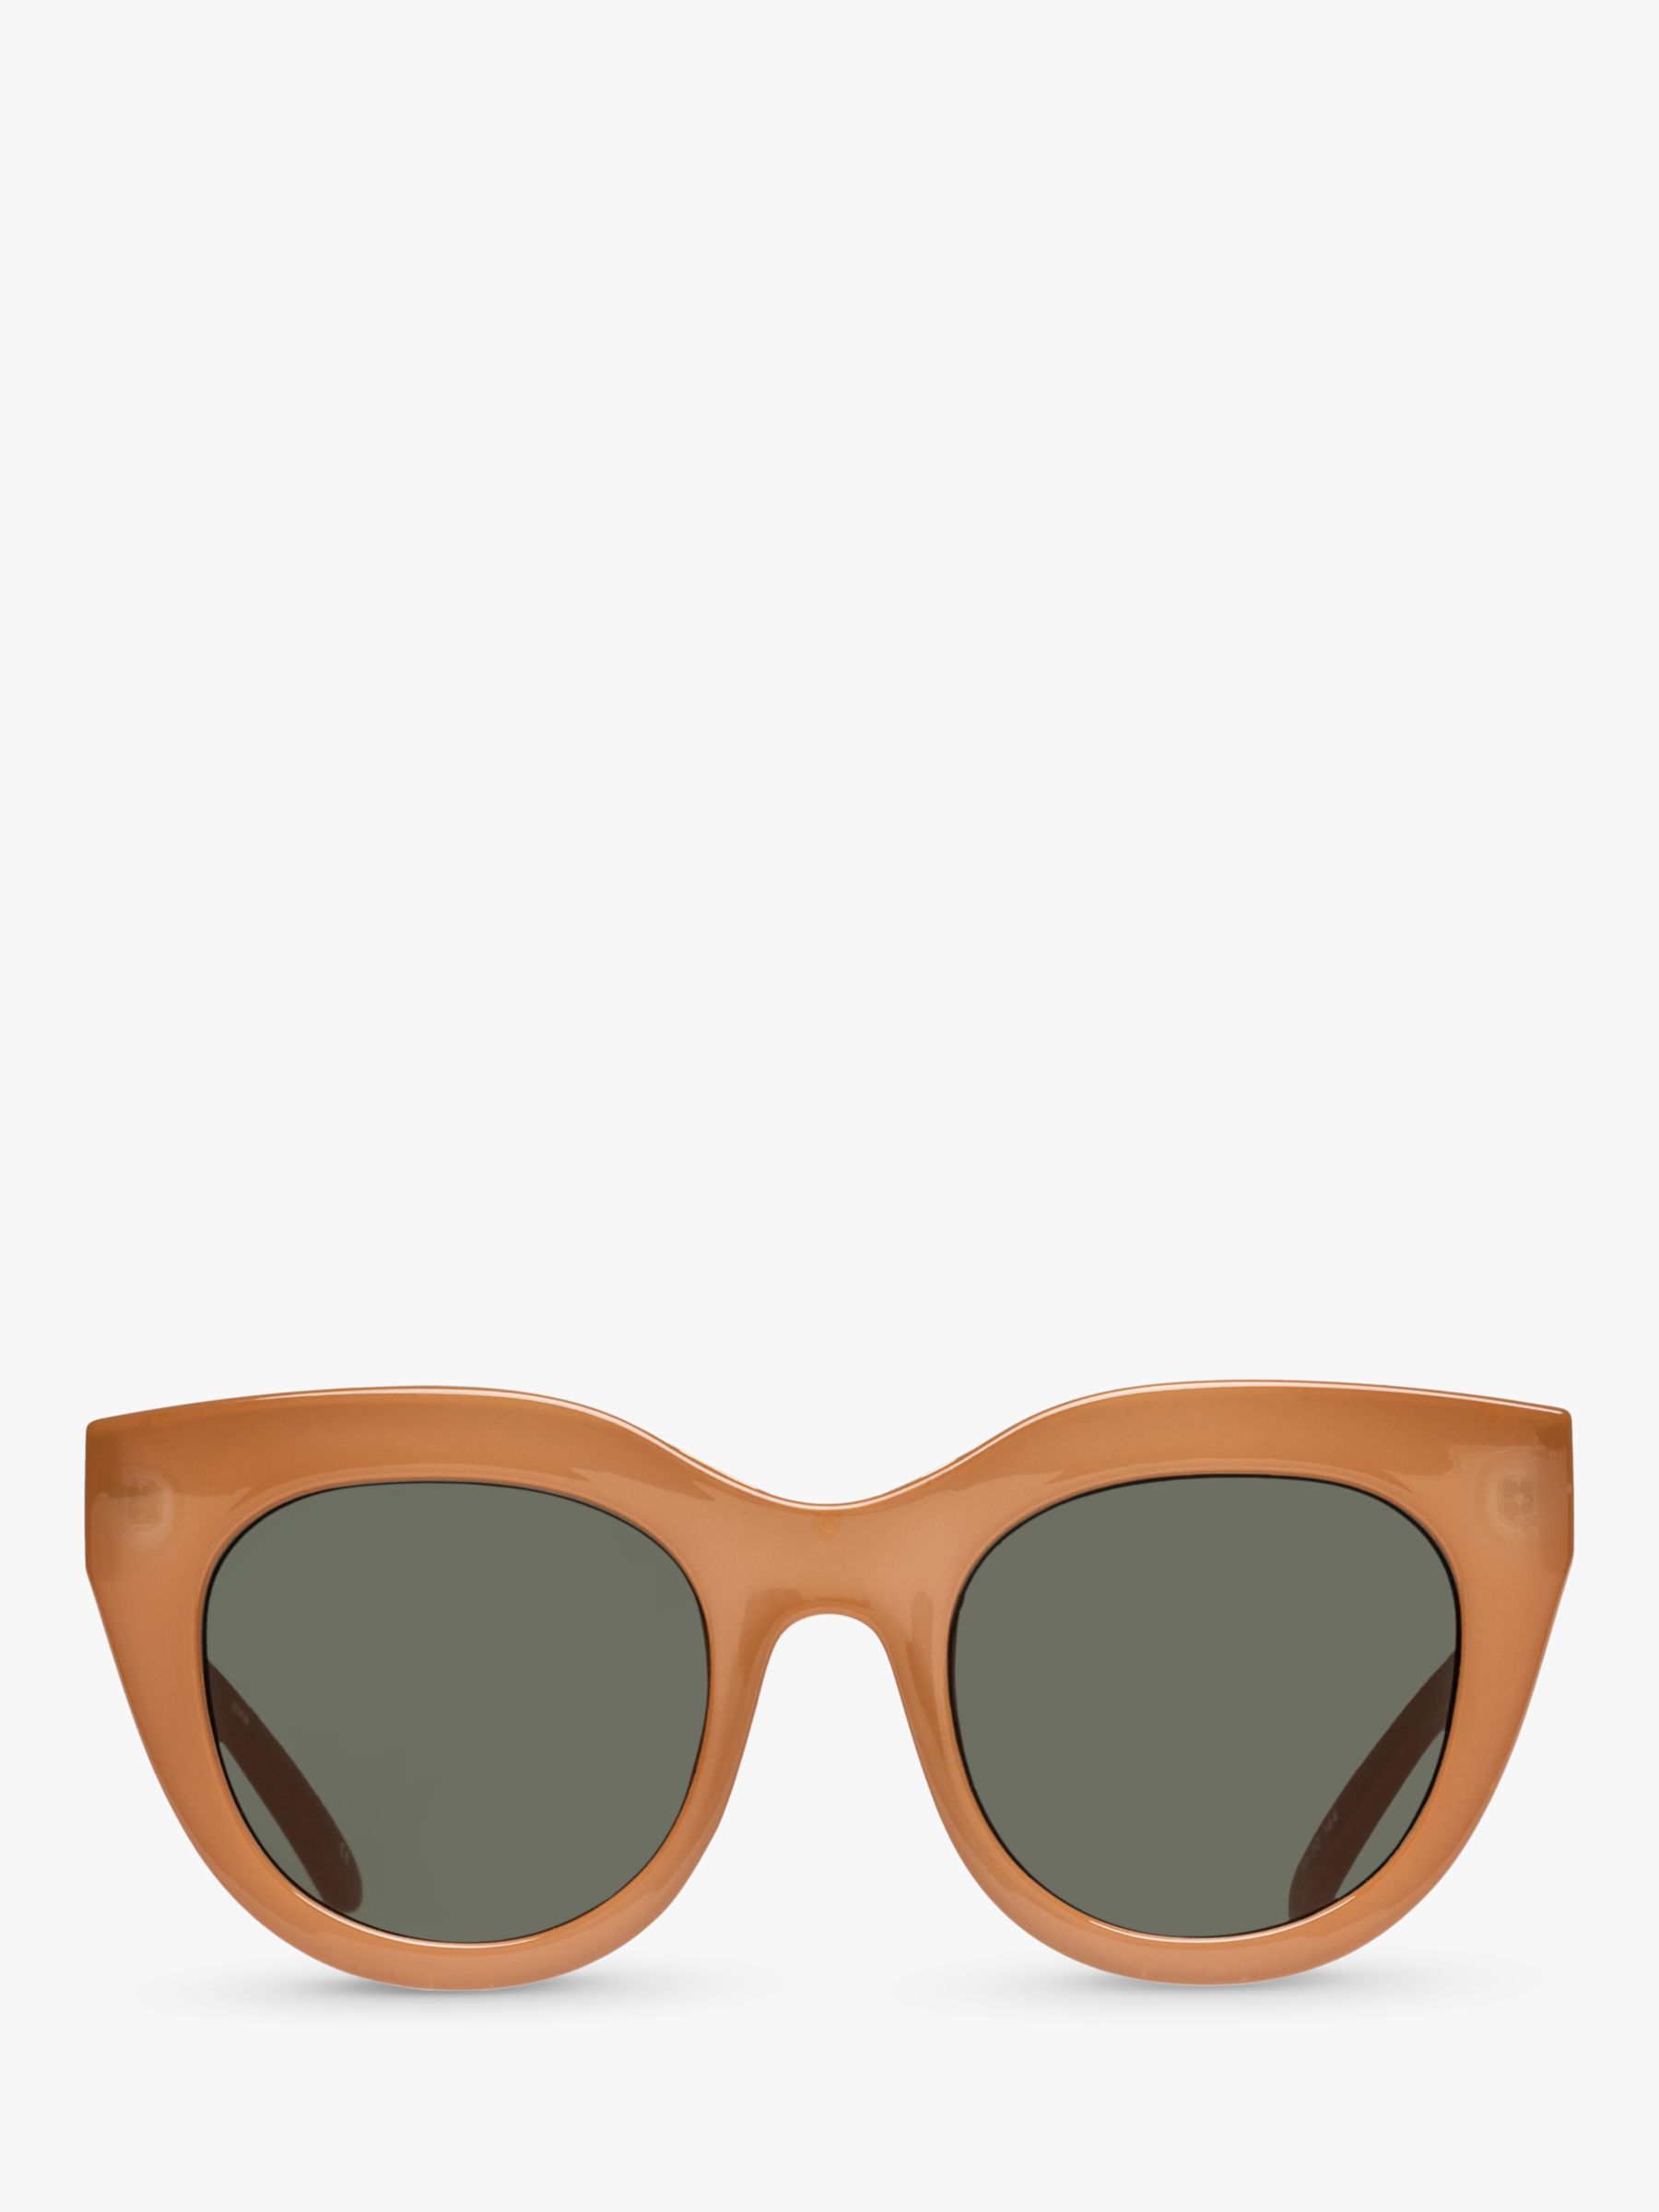 Le Specs Women's Air Heart Cat's Eye Sunglasses, Tan